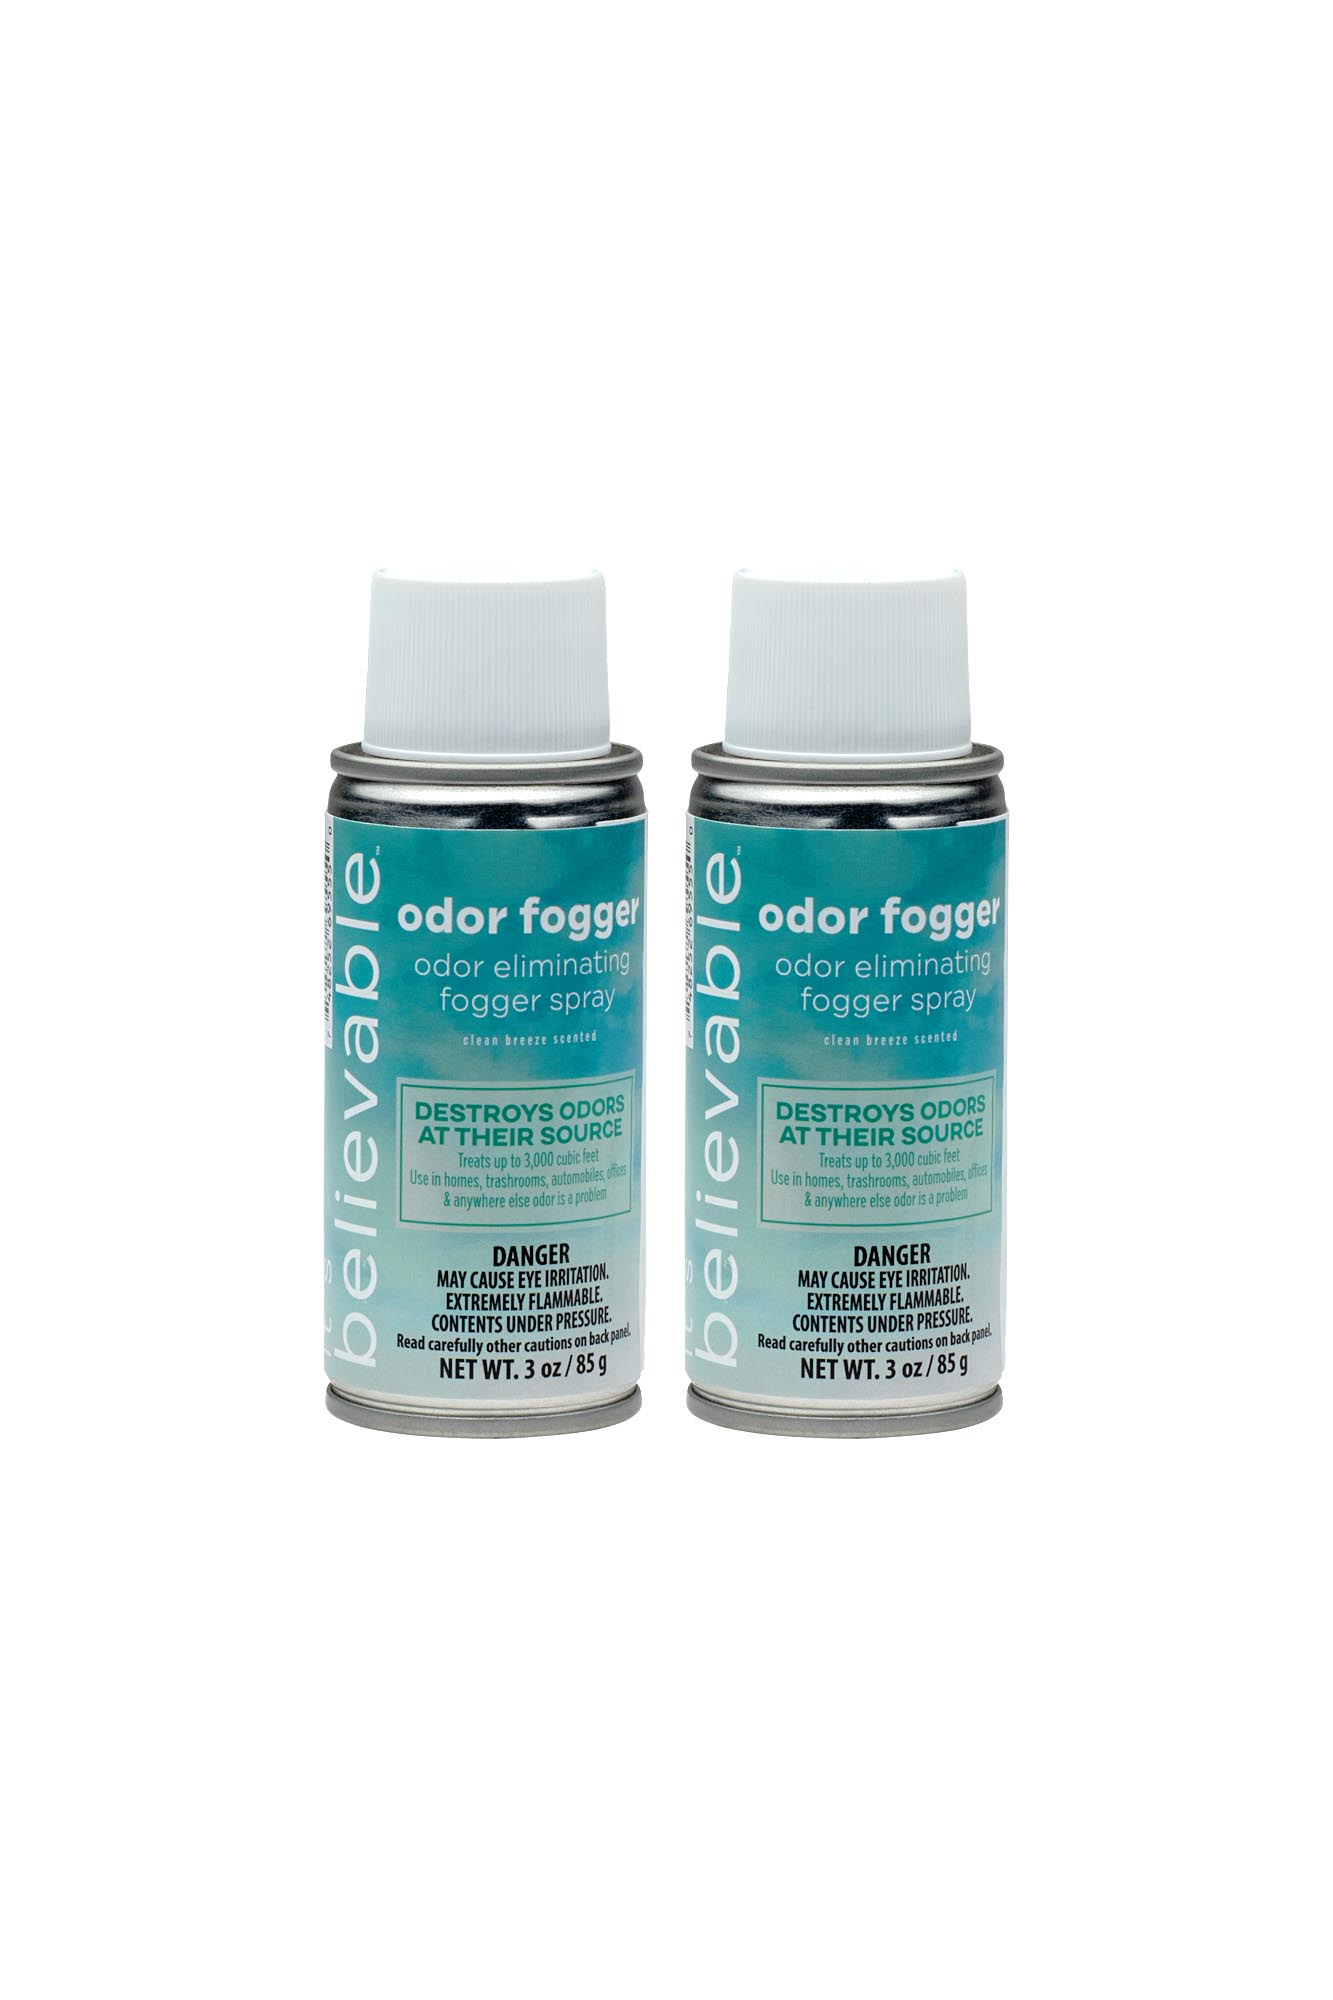 It’s Believable™ Odor Fogger Odor Neutralizing Spray Can - 2 Pack